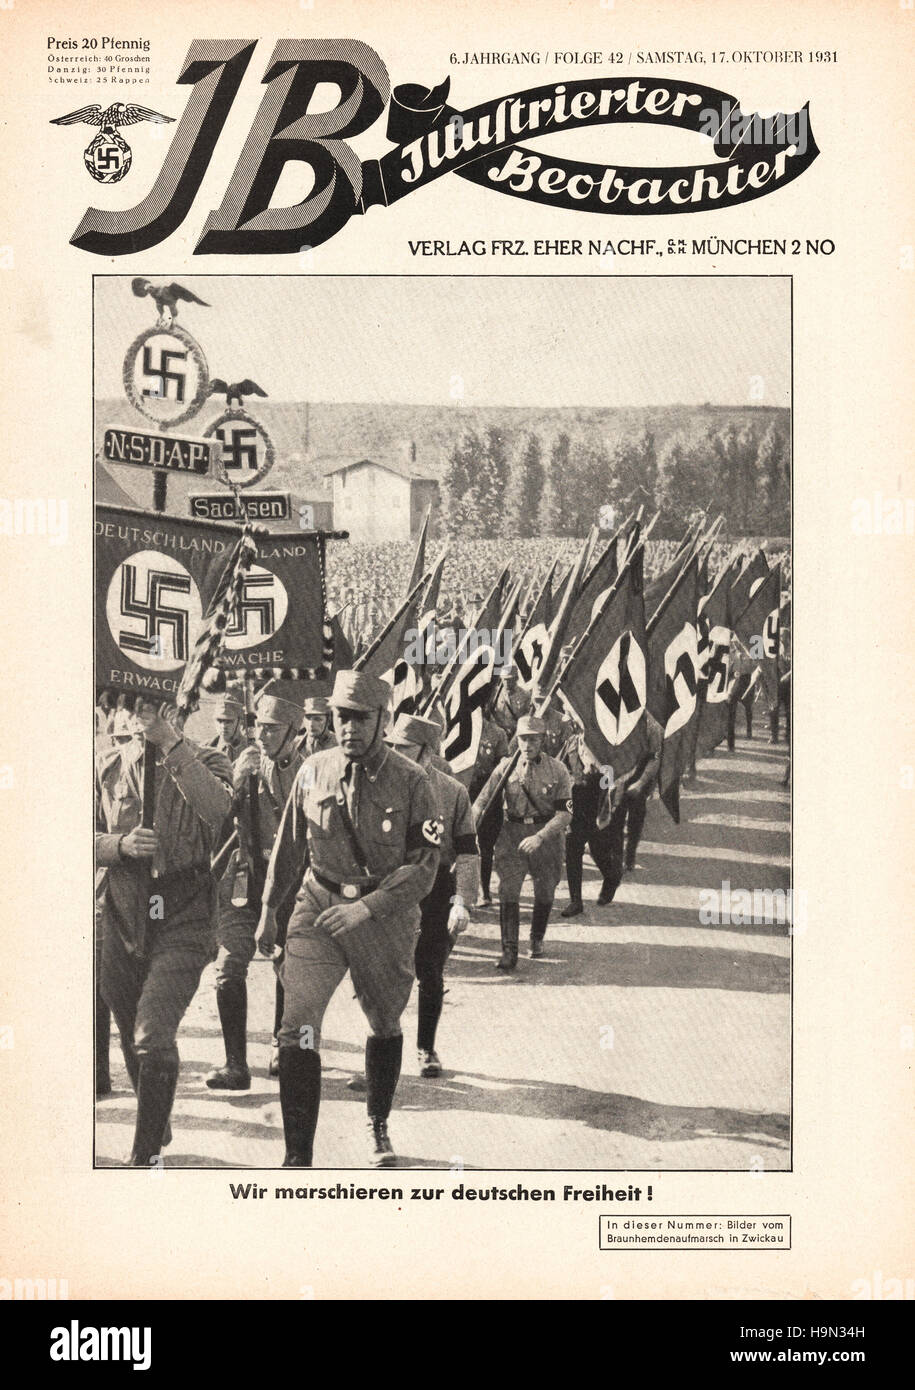 1931 Illustrierte Beobachter front page Nazis on parade Stock Photo